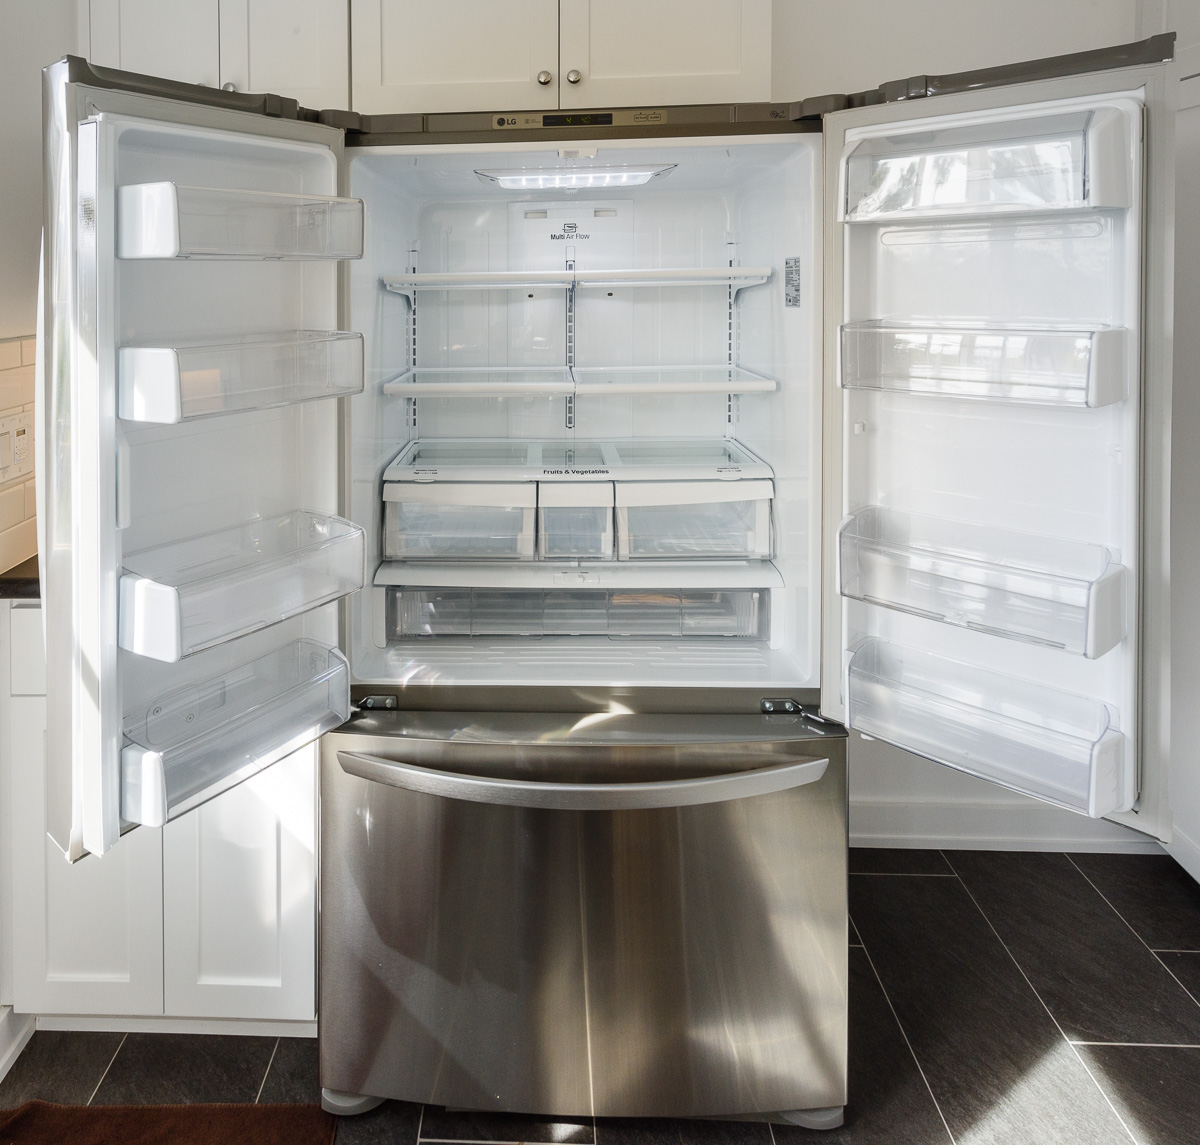  Large new French door style fridge / freezer with ice maker 